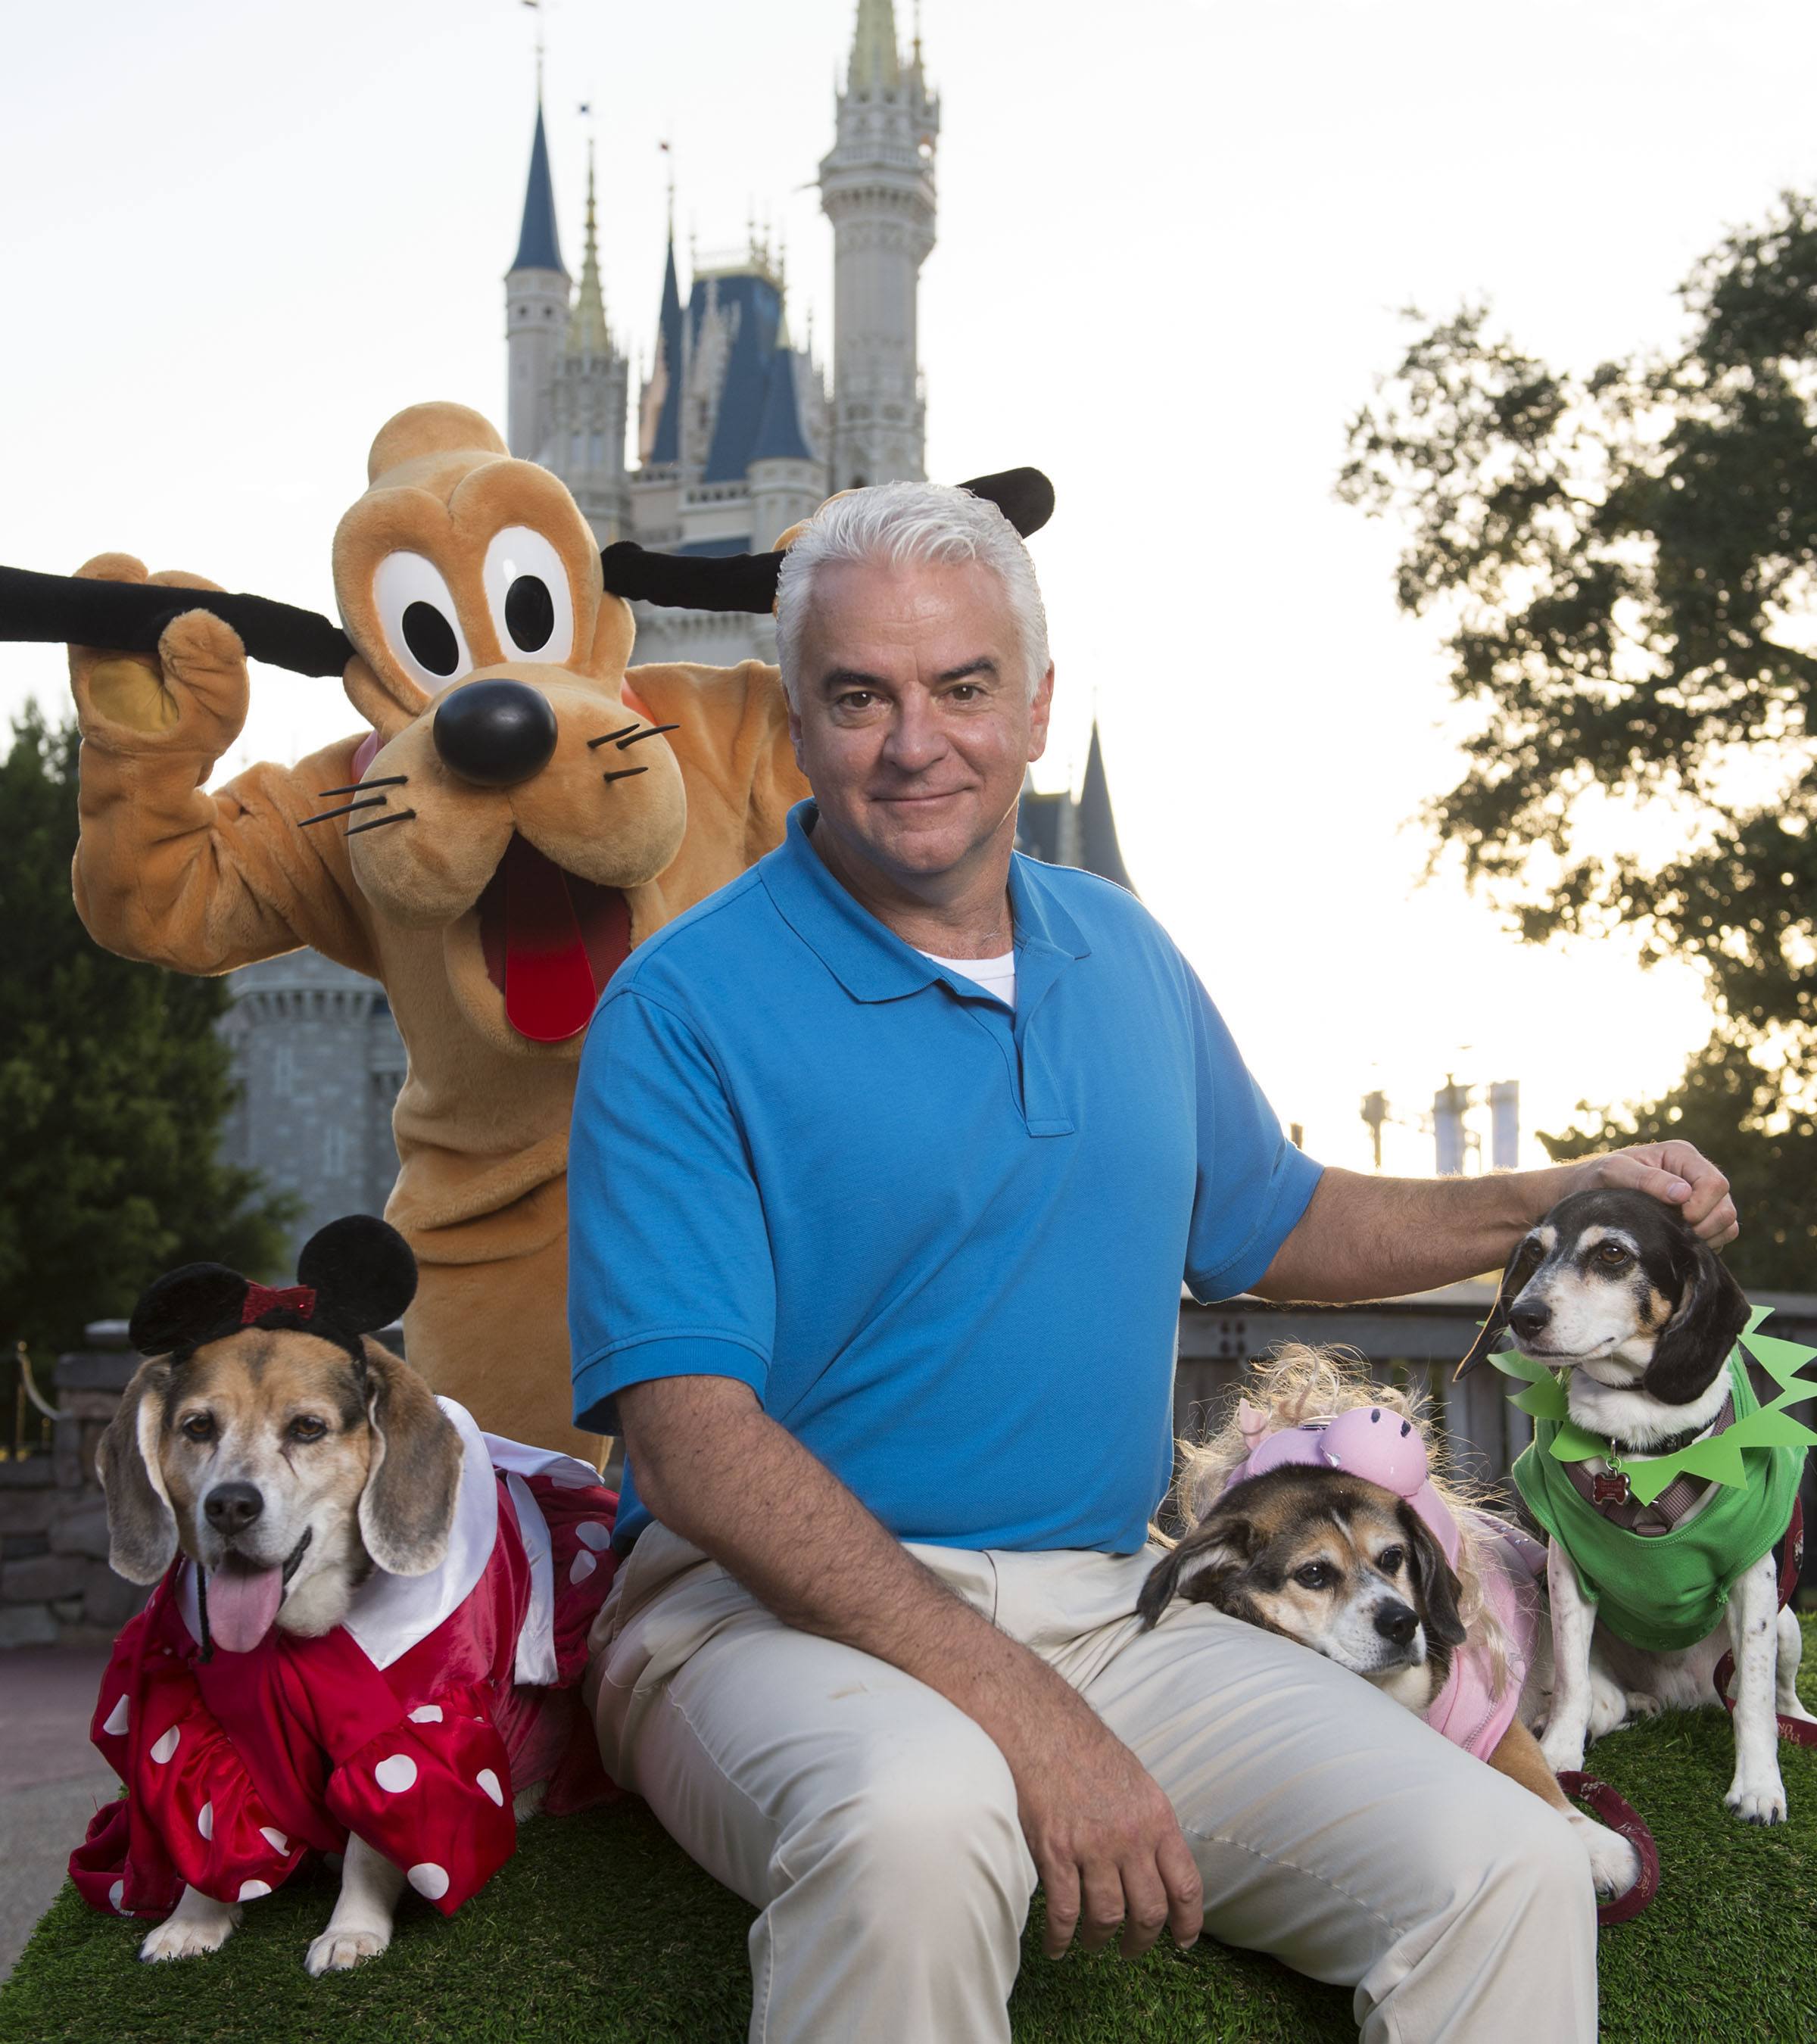  actor John O'Hurley poses with Pluto and three Disney-dressed dogs at the Magic Kingdom at Walt Disney World Resort 